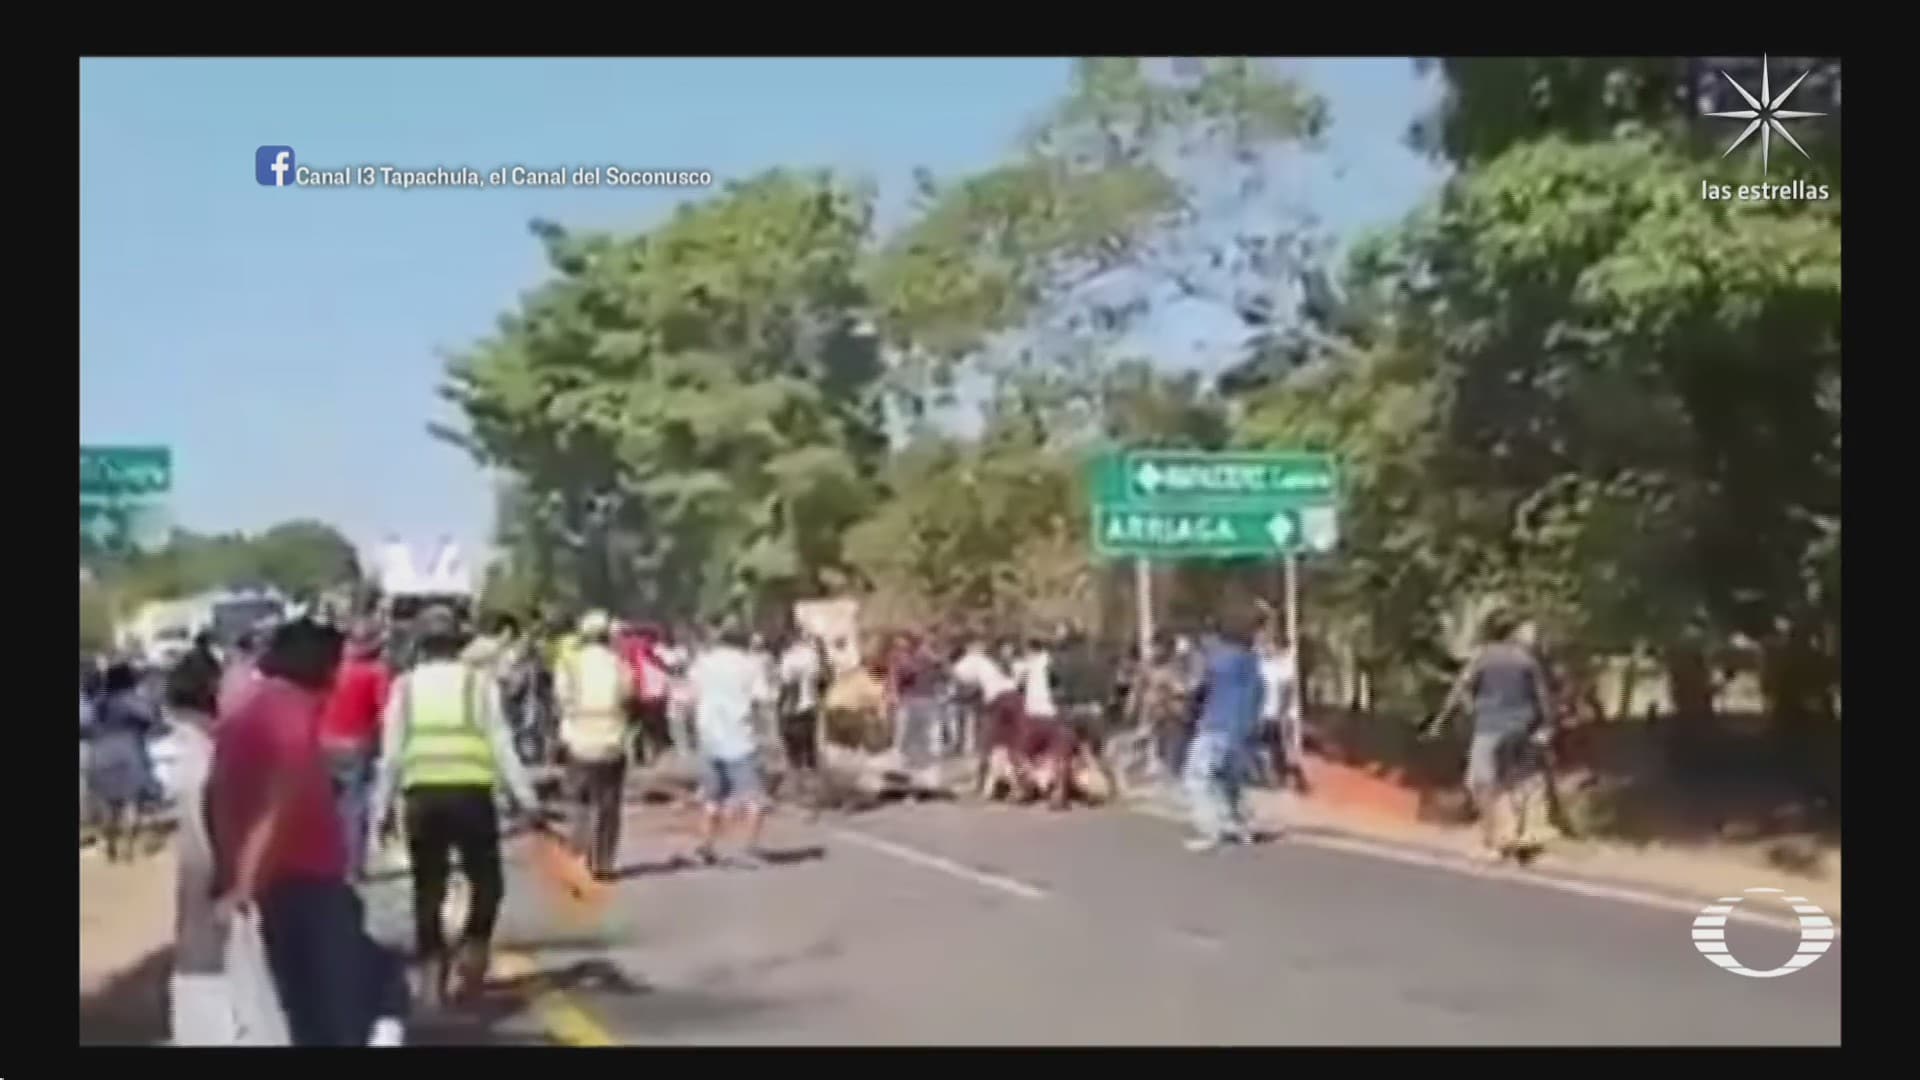 bloqueo en carretera de mapastepec chiapas provoca enfrentamiento